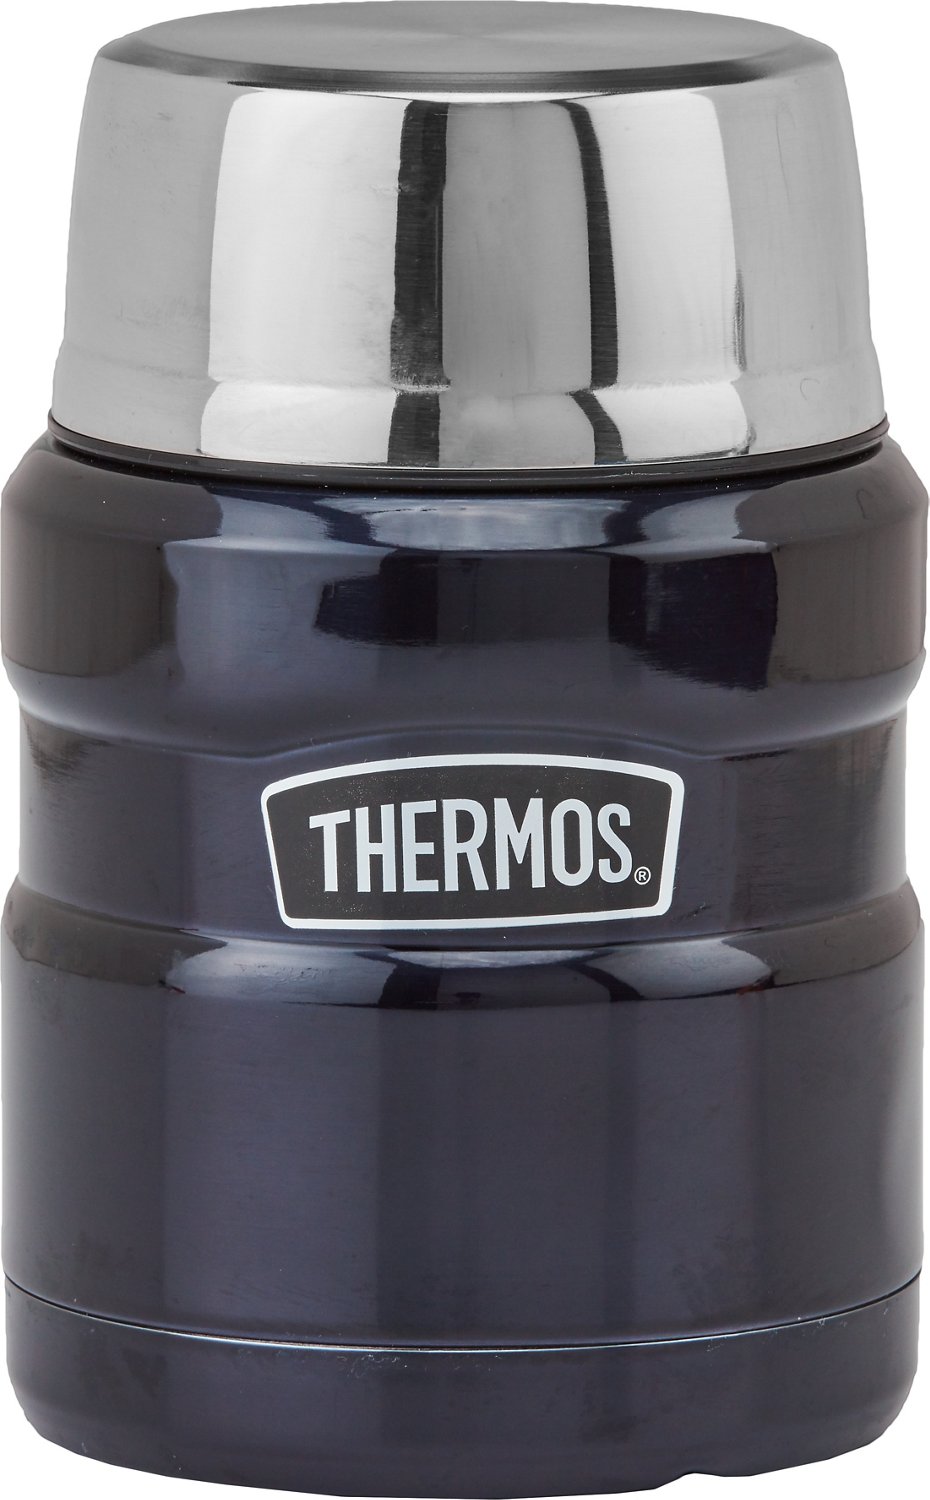 Thermos nissan vacuum insulated food jar #1